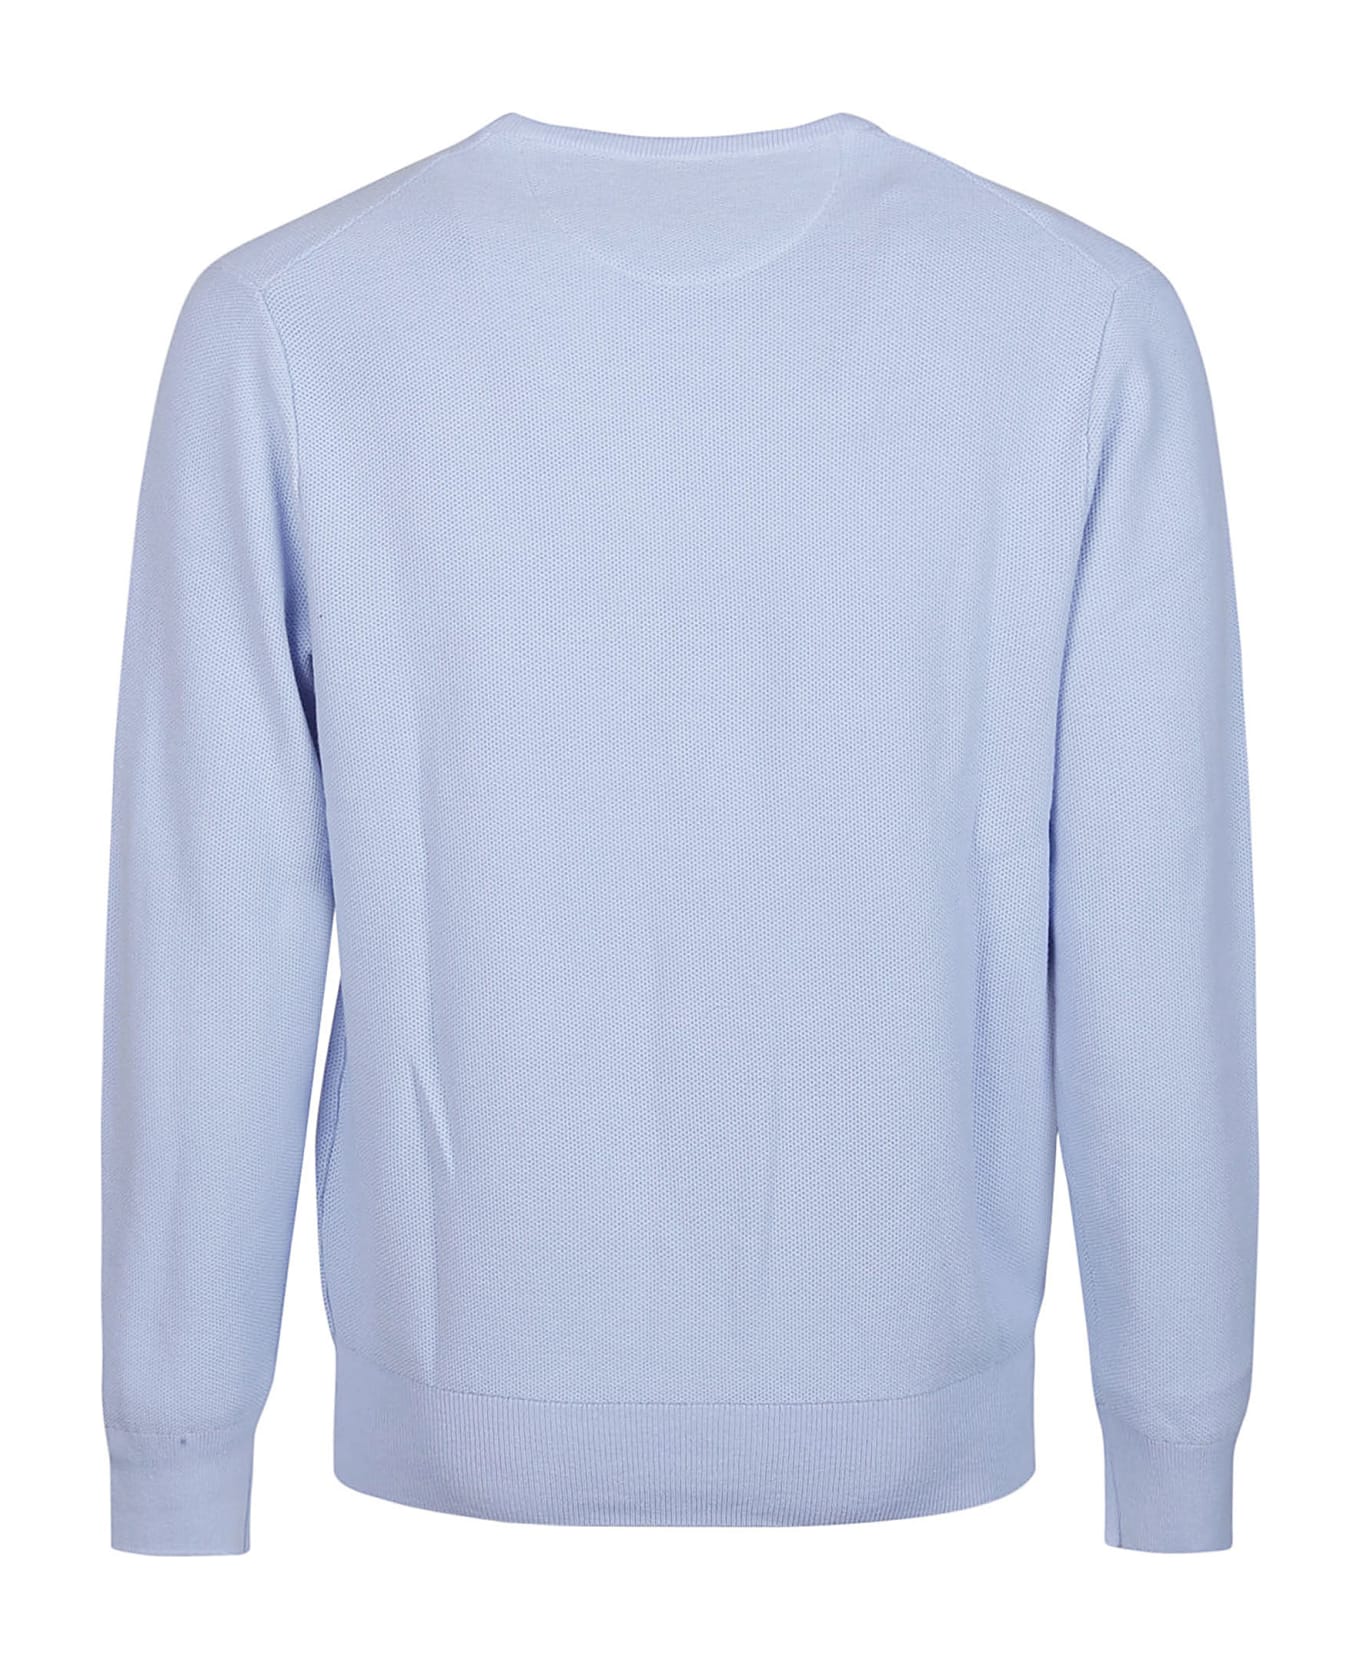 Polo Ralph Lauren Long Sleeve Sweater - Blue hyacinth